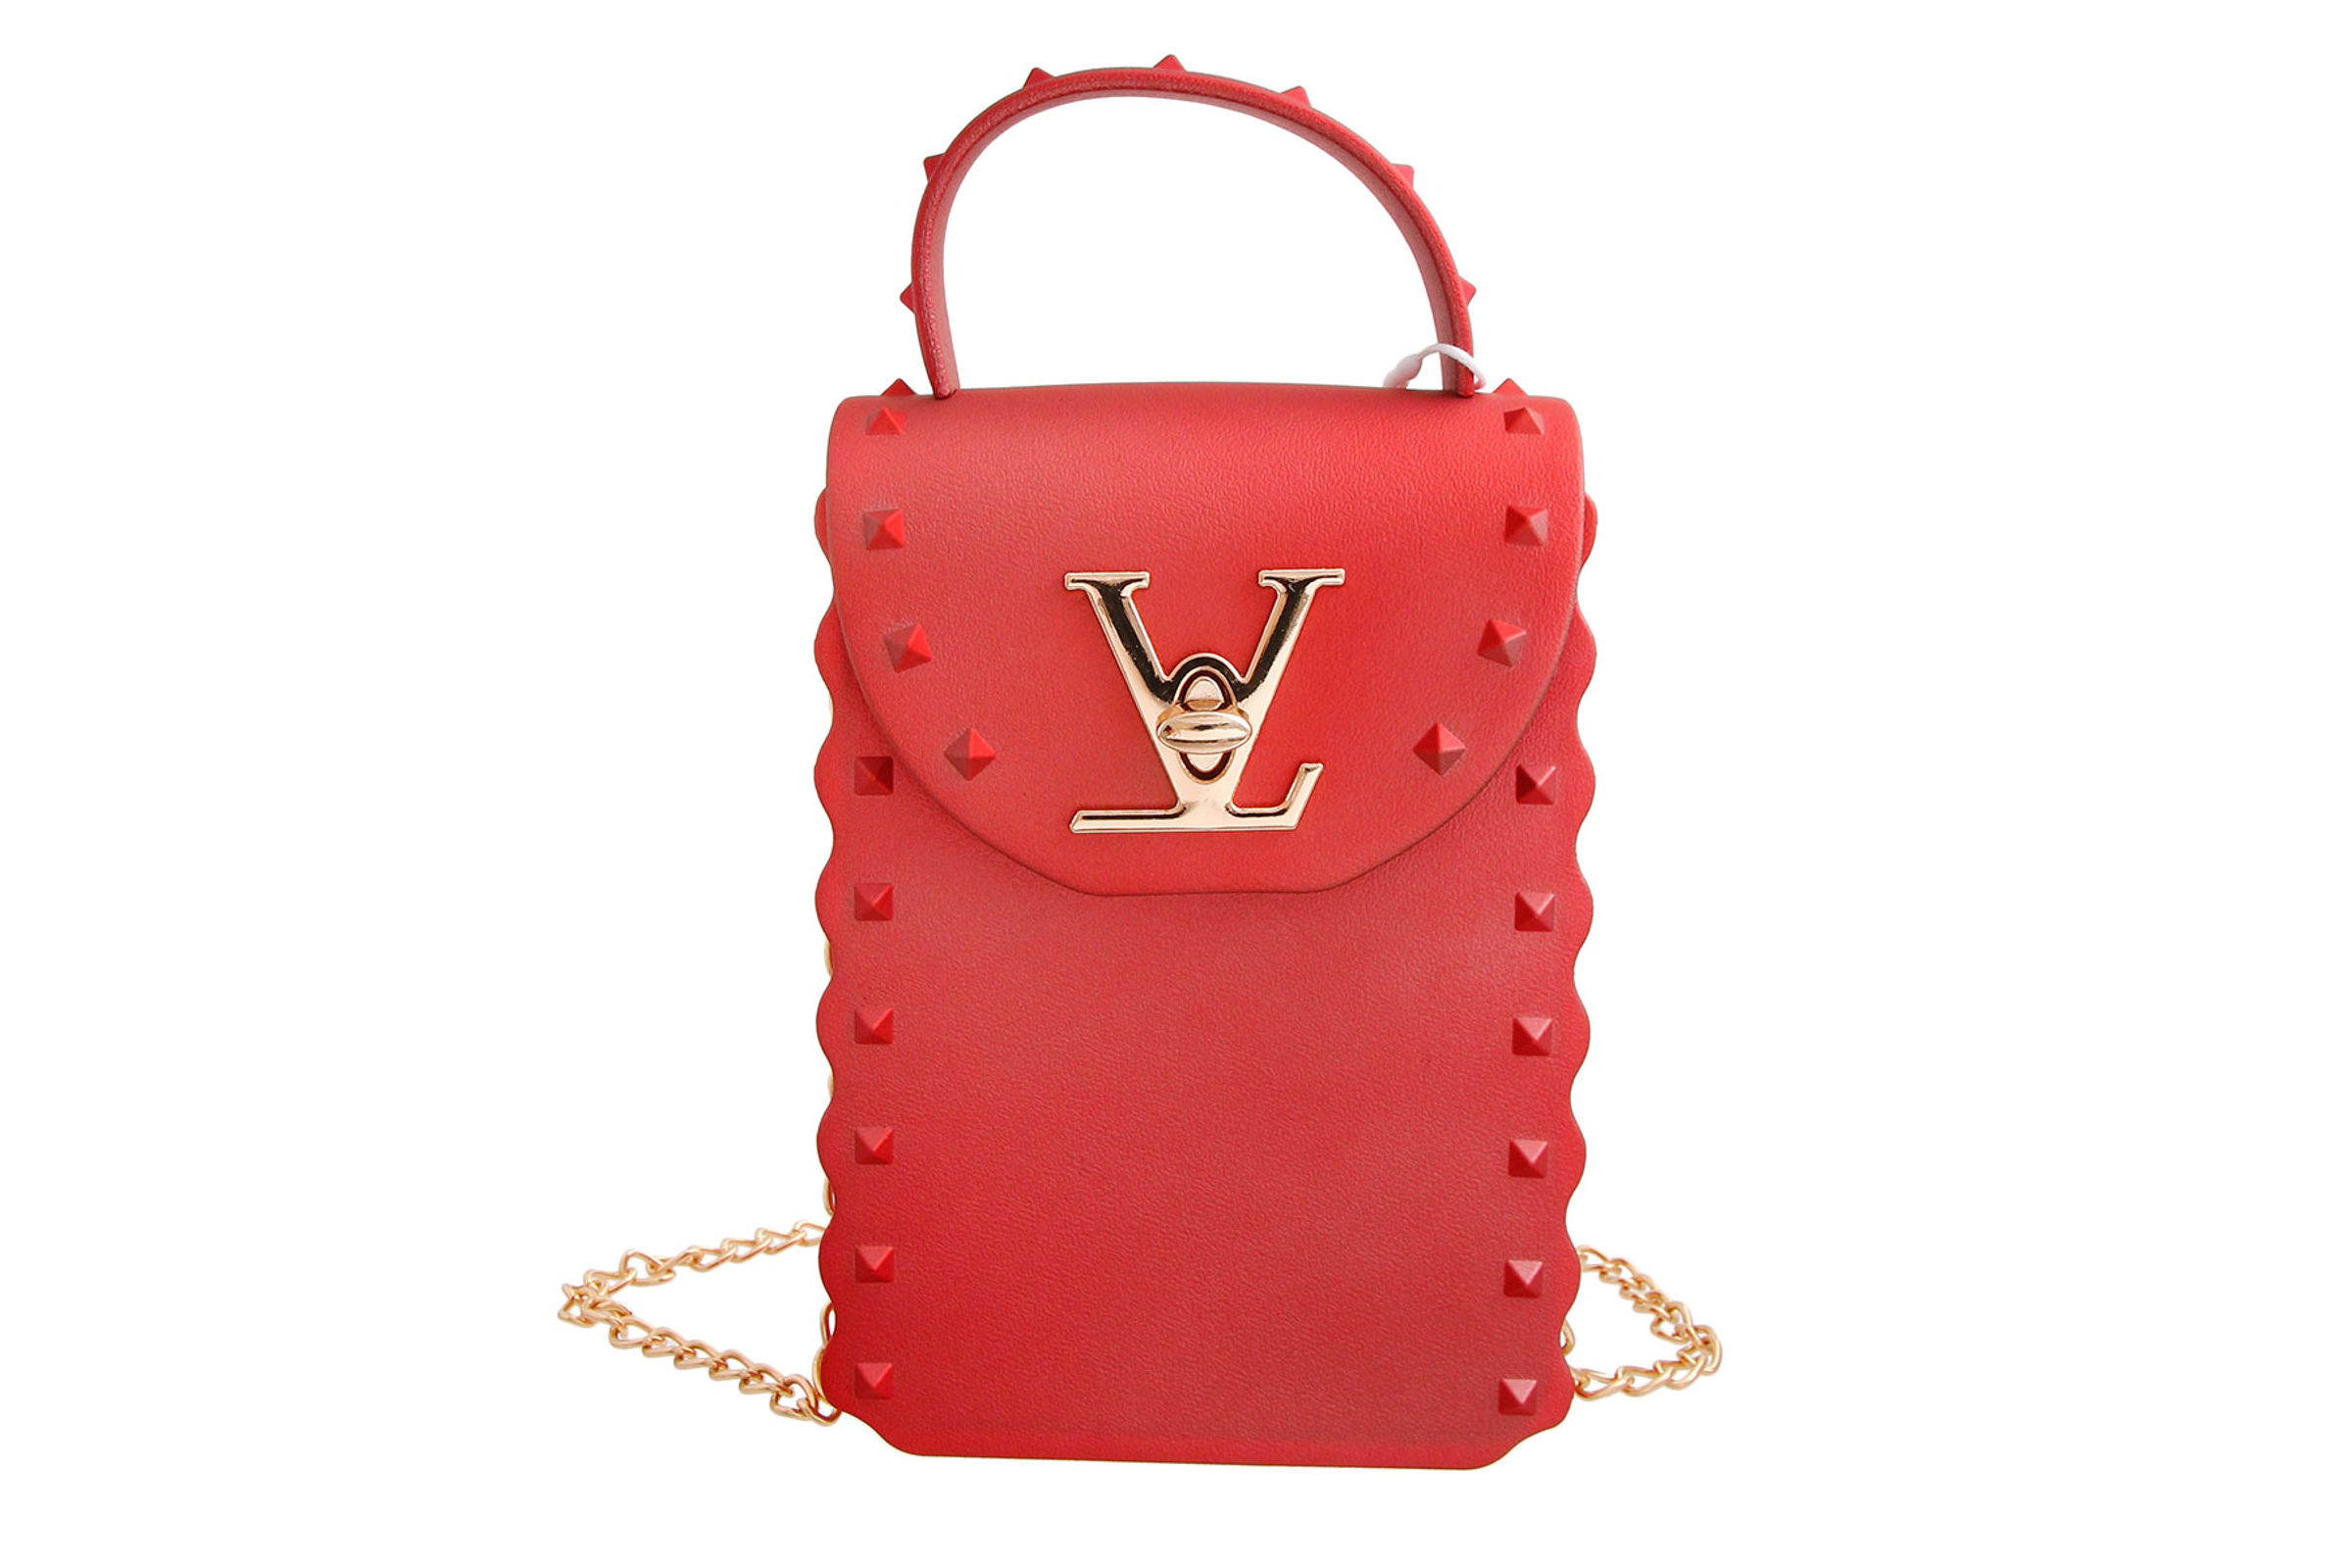 bag, louisvuitton red clutch bag lv - Wheretoget